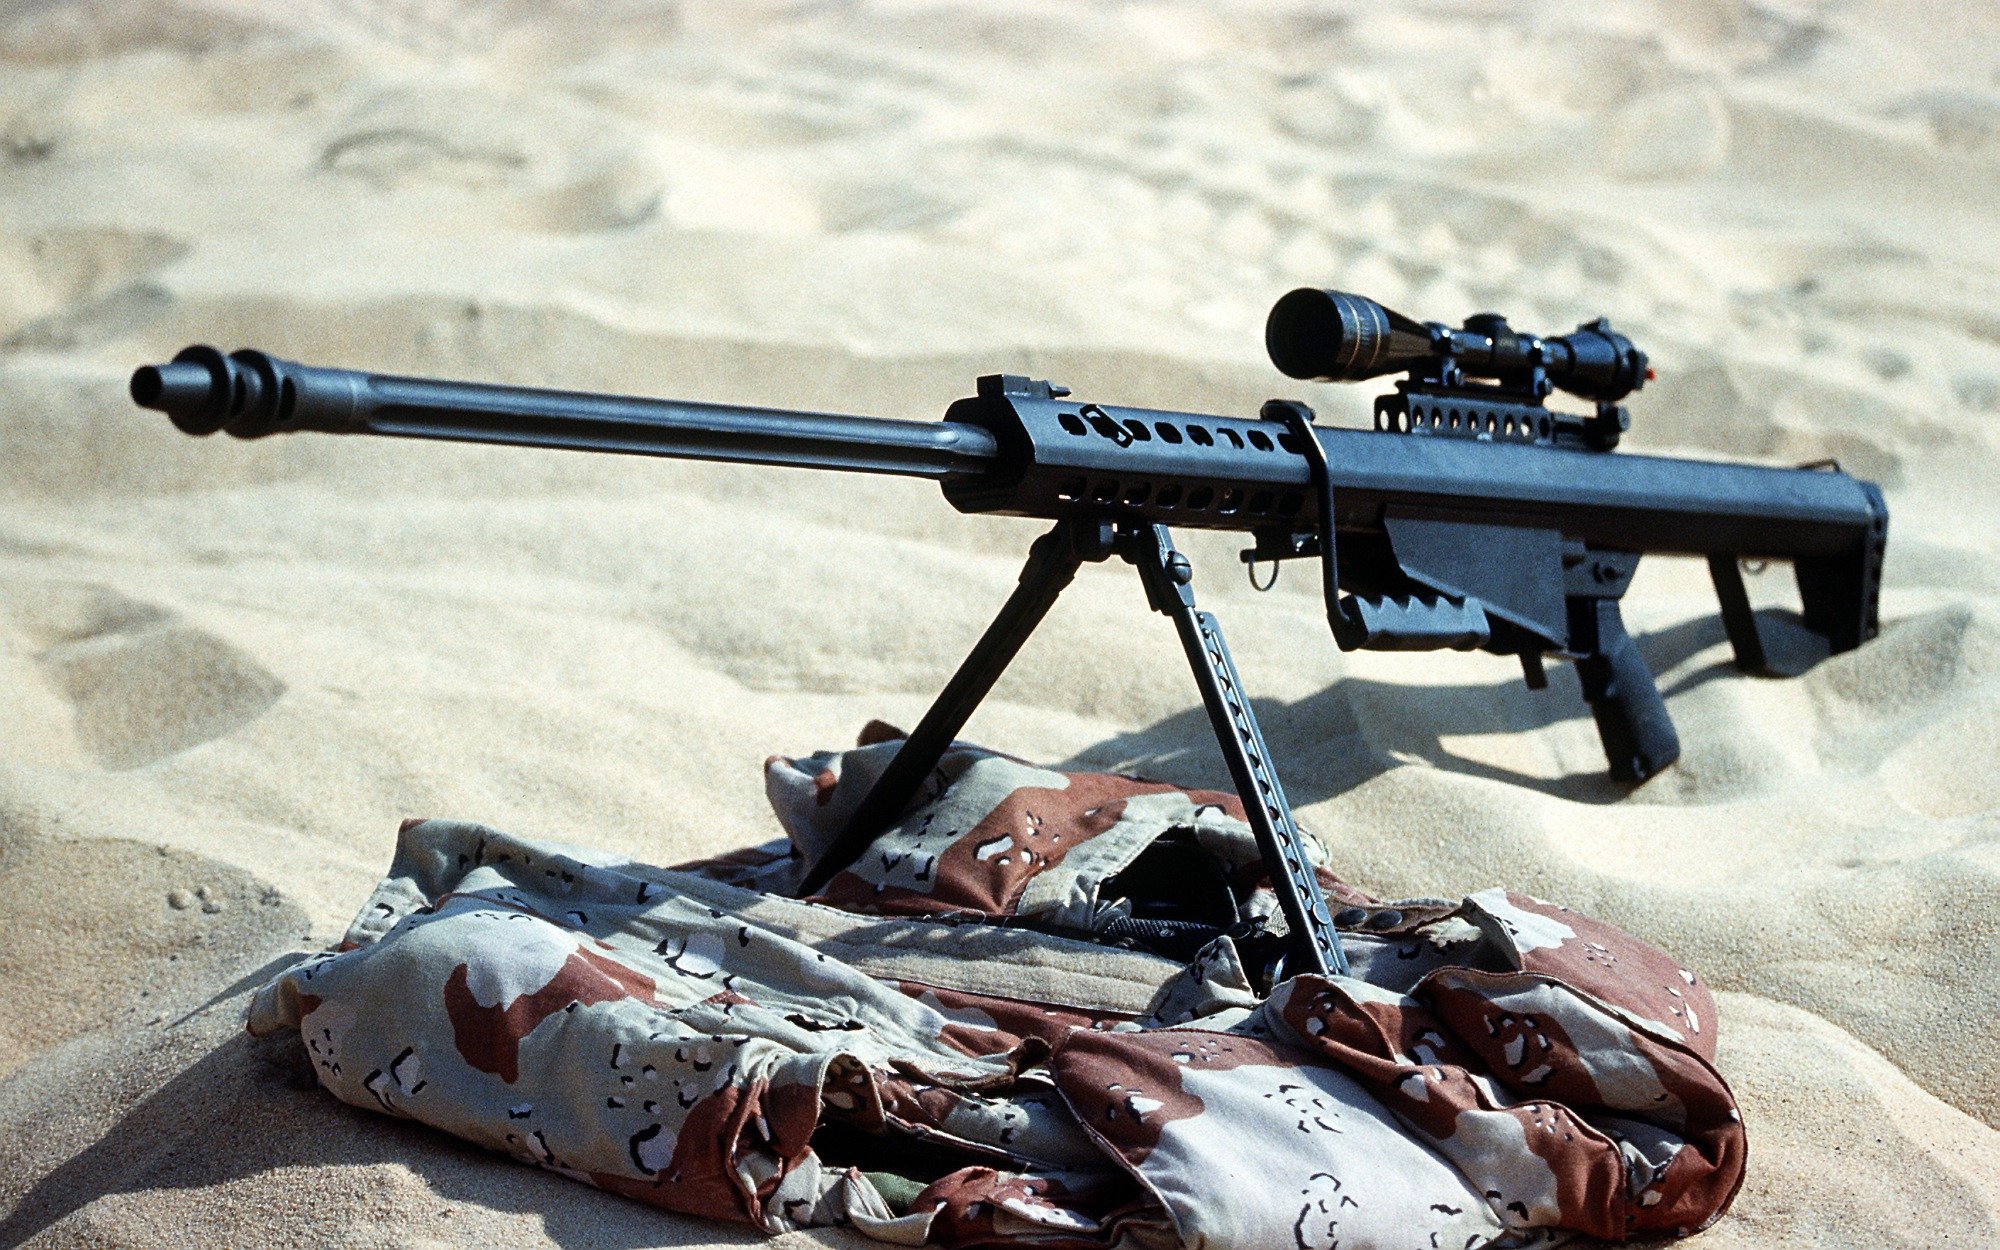 Barrett Firearms Model 82 The World's Best Sniper Rifle? The